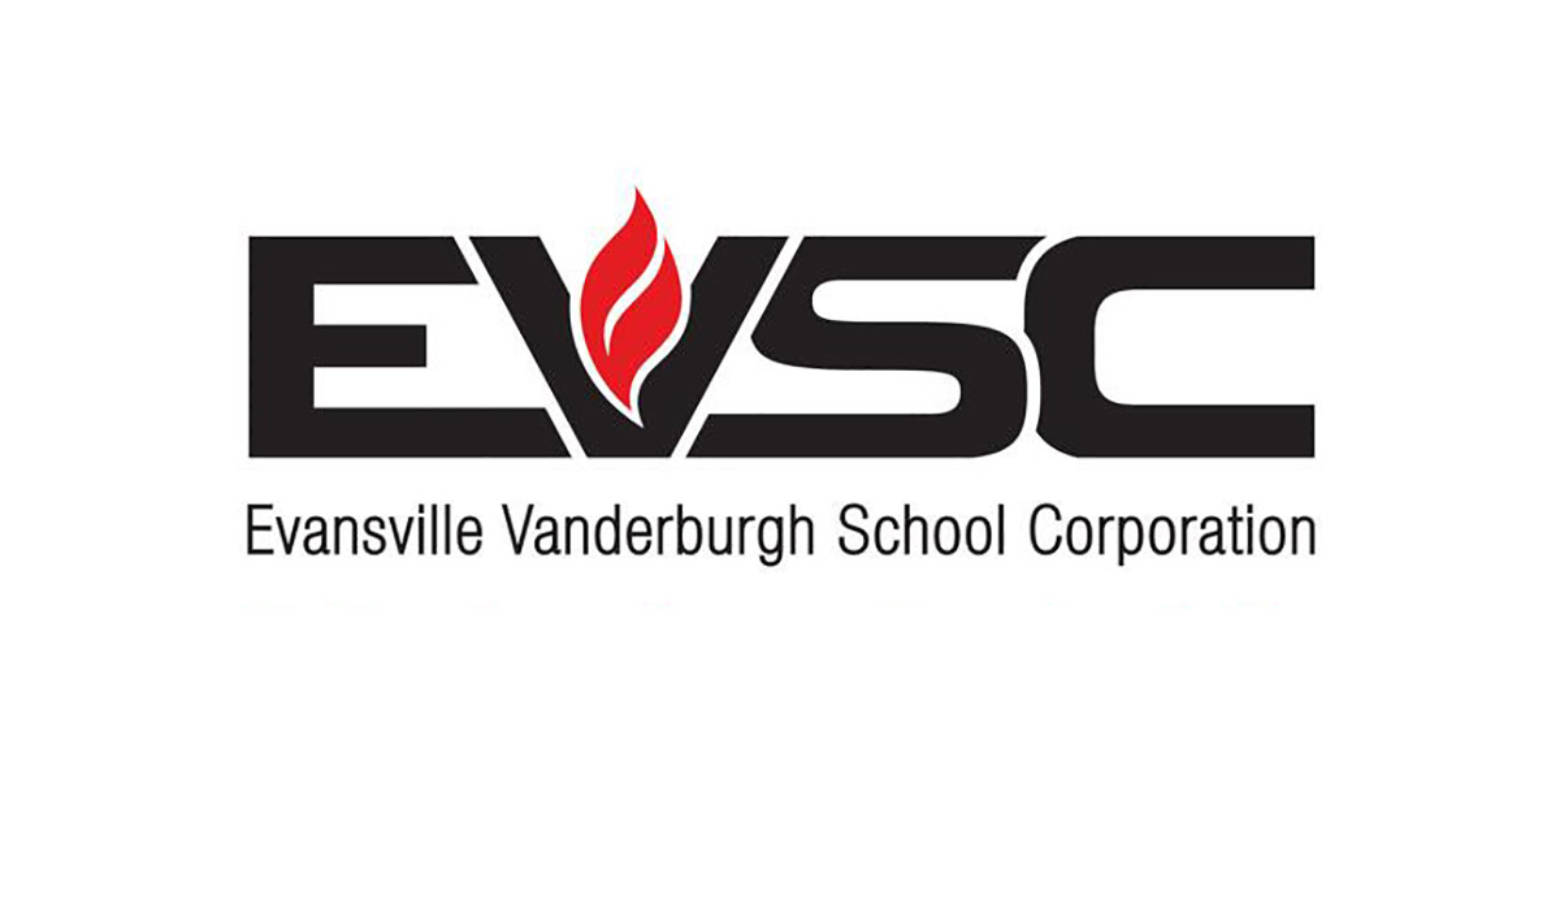 (Evansville Vanderburgh School Corporation)